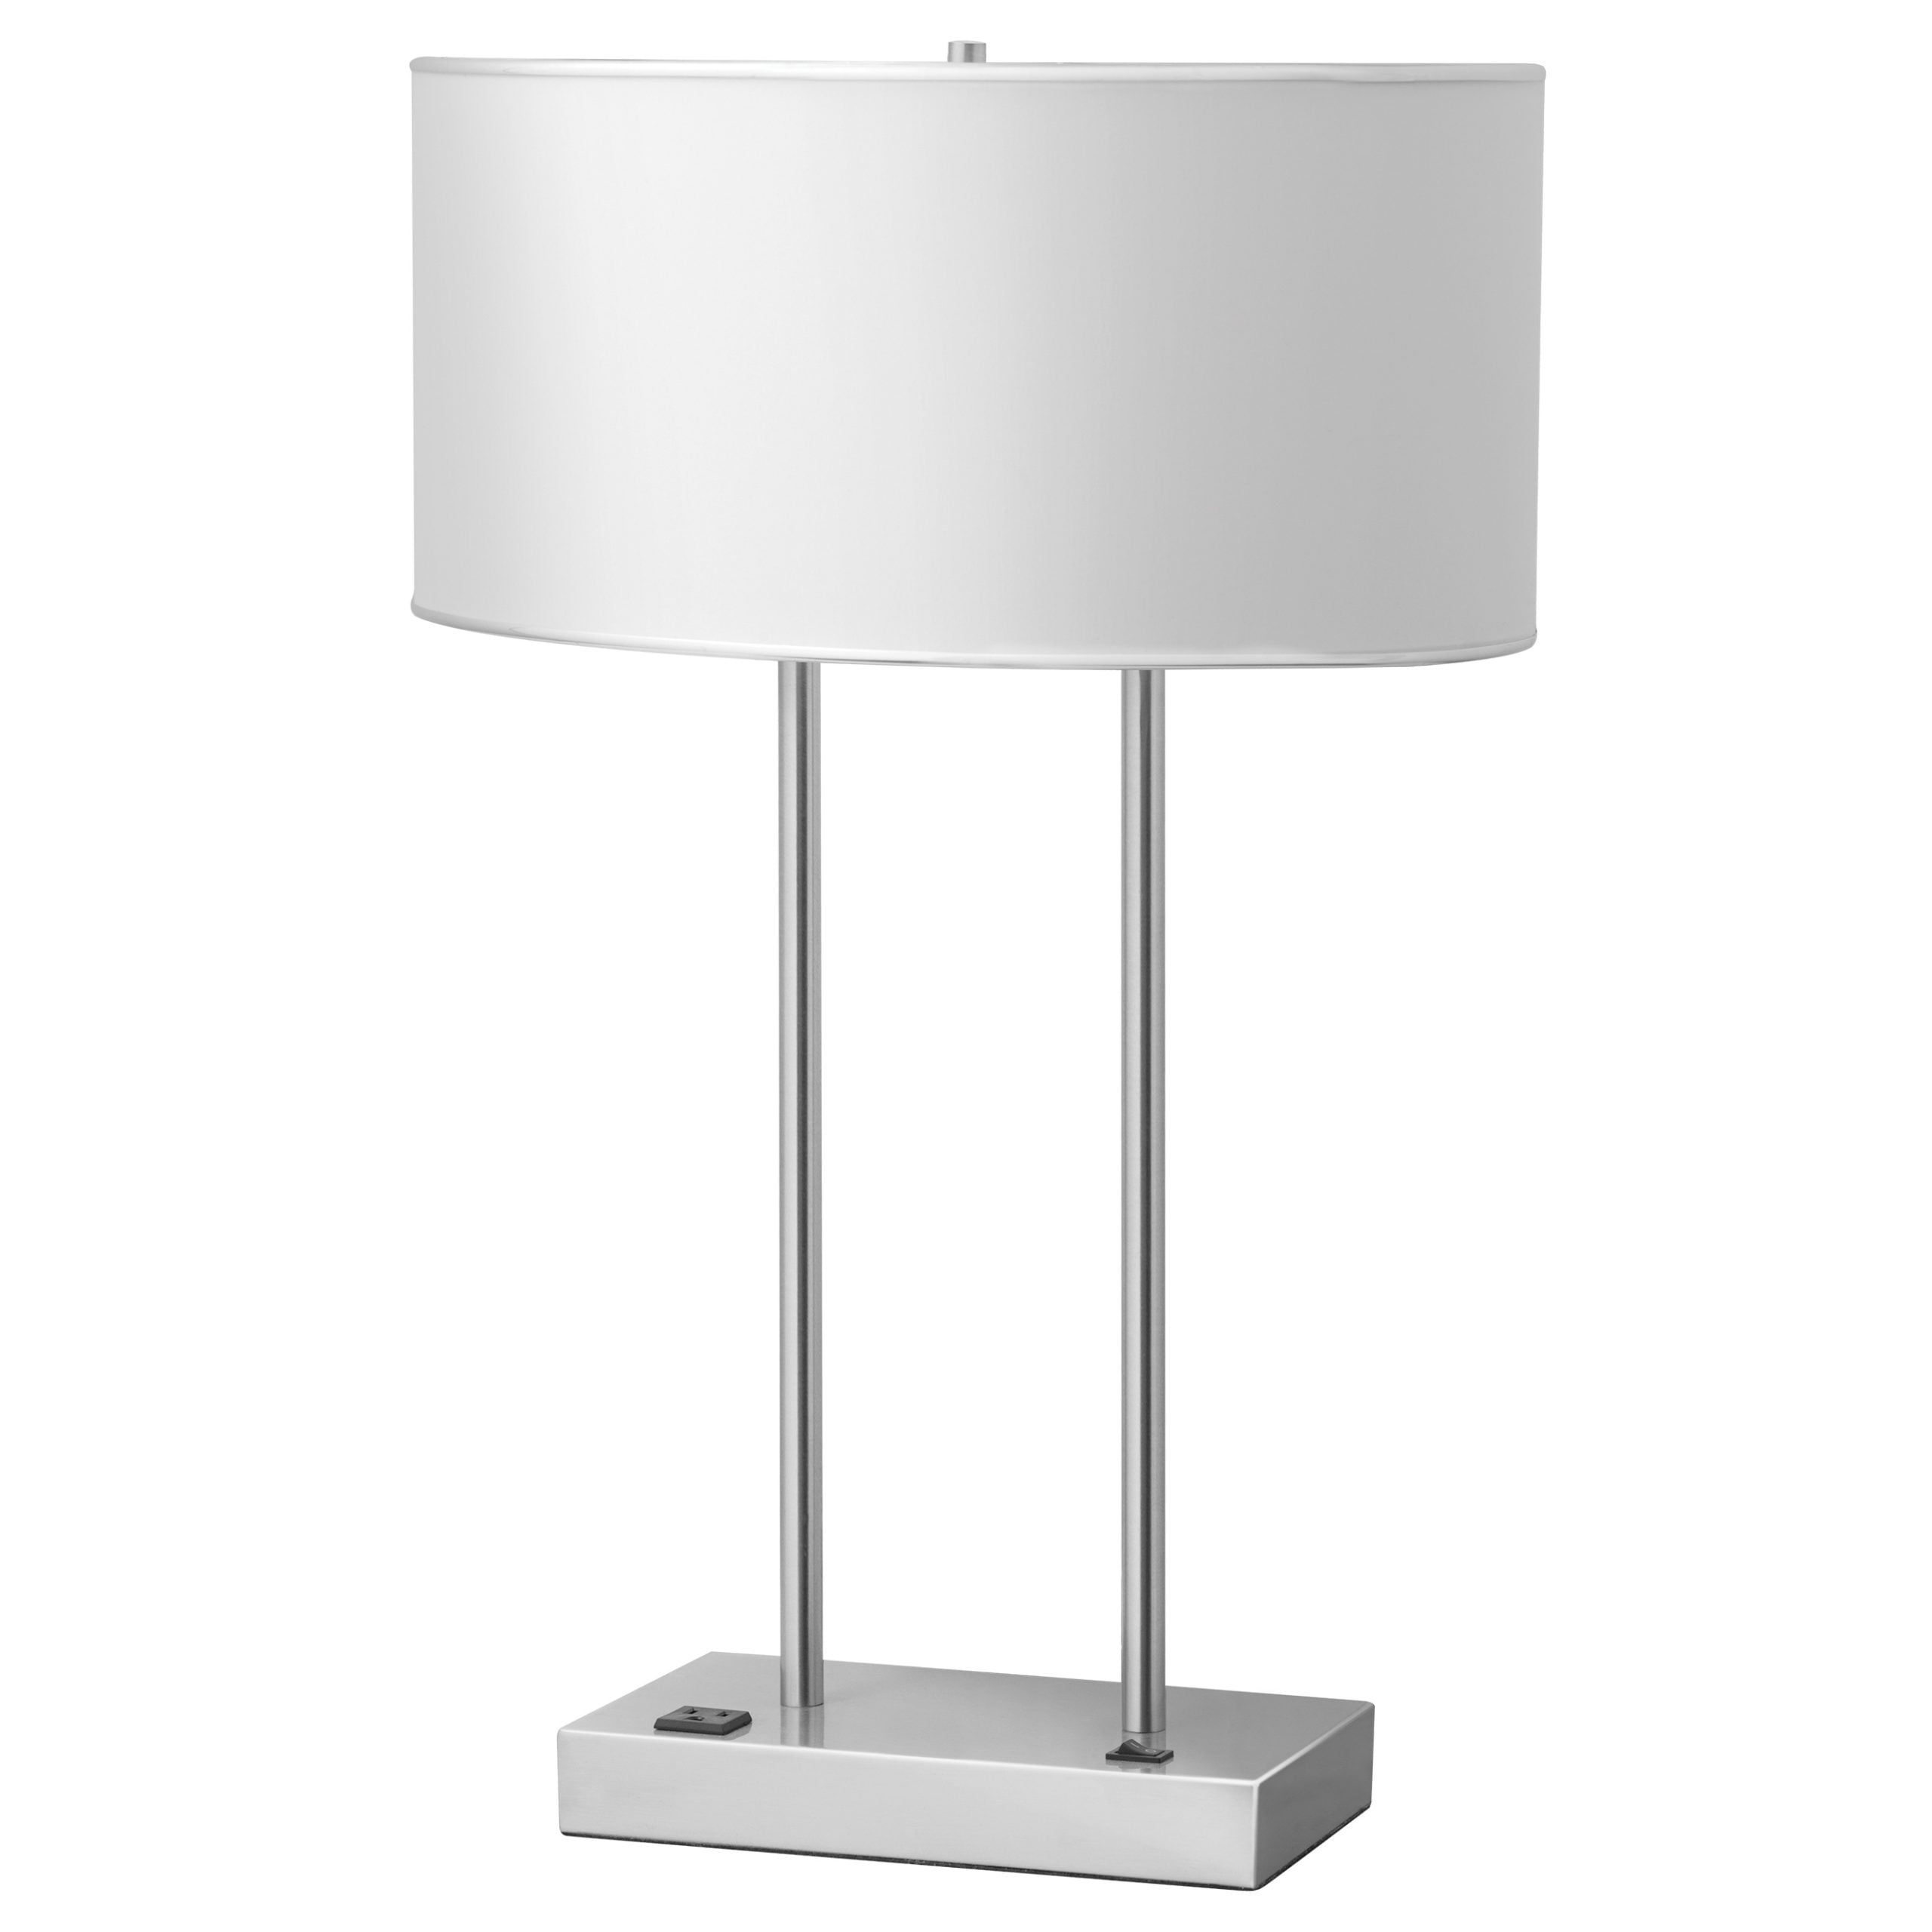 Clarity Single Table Lamp